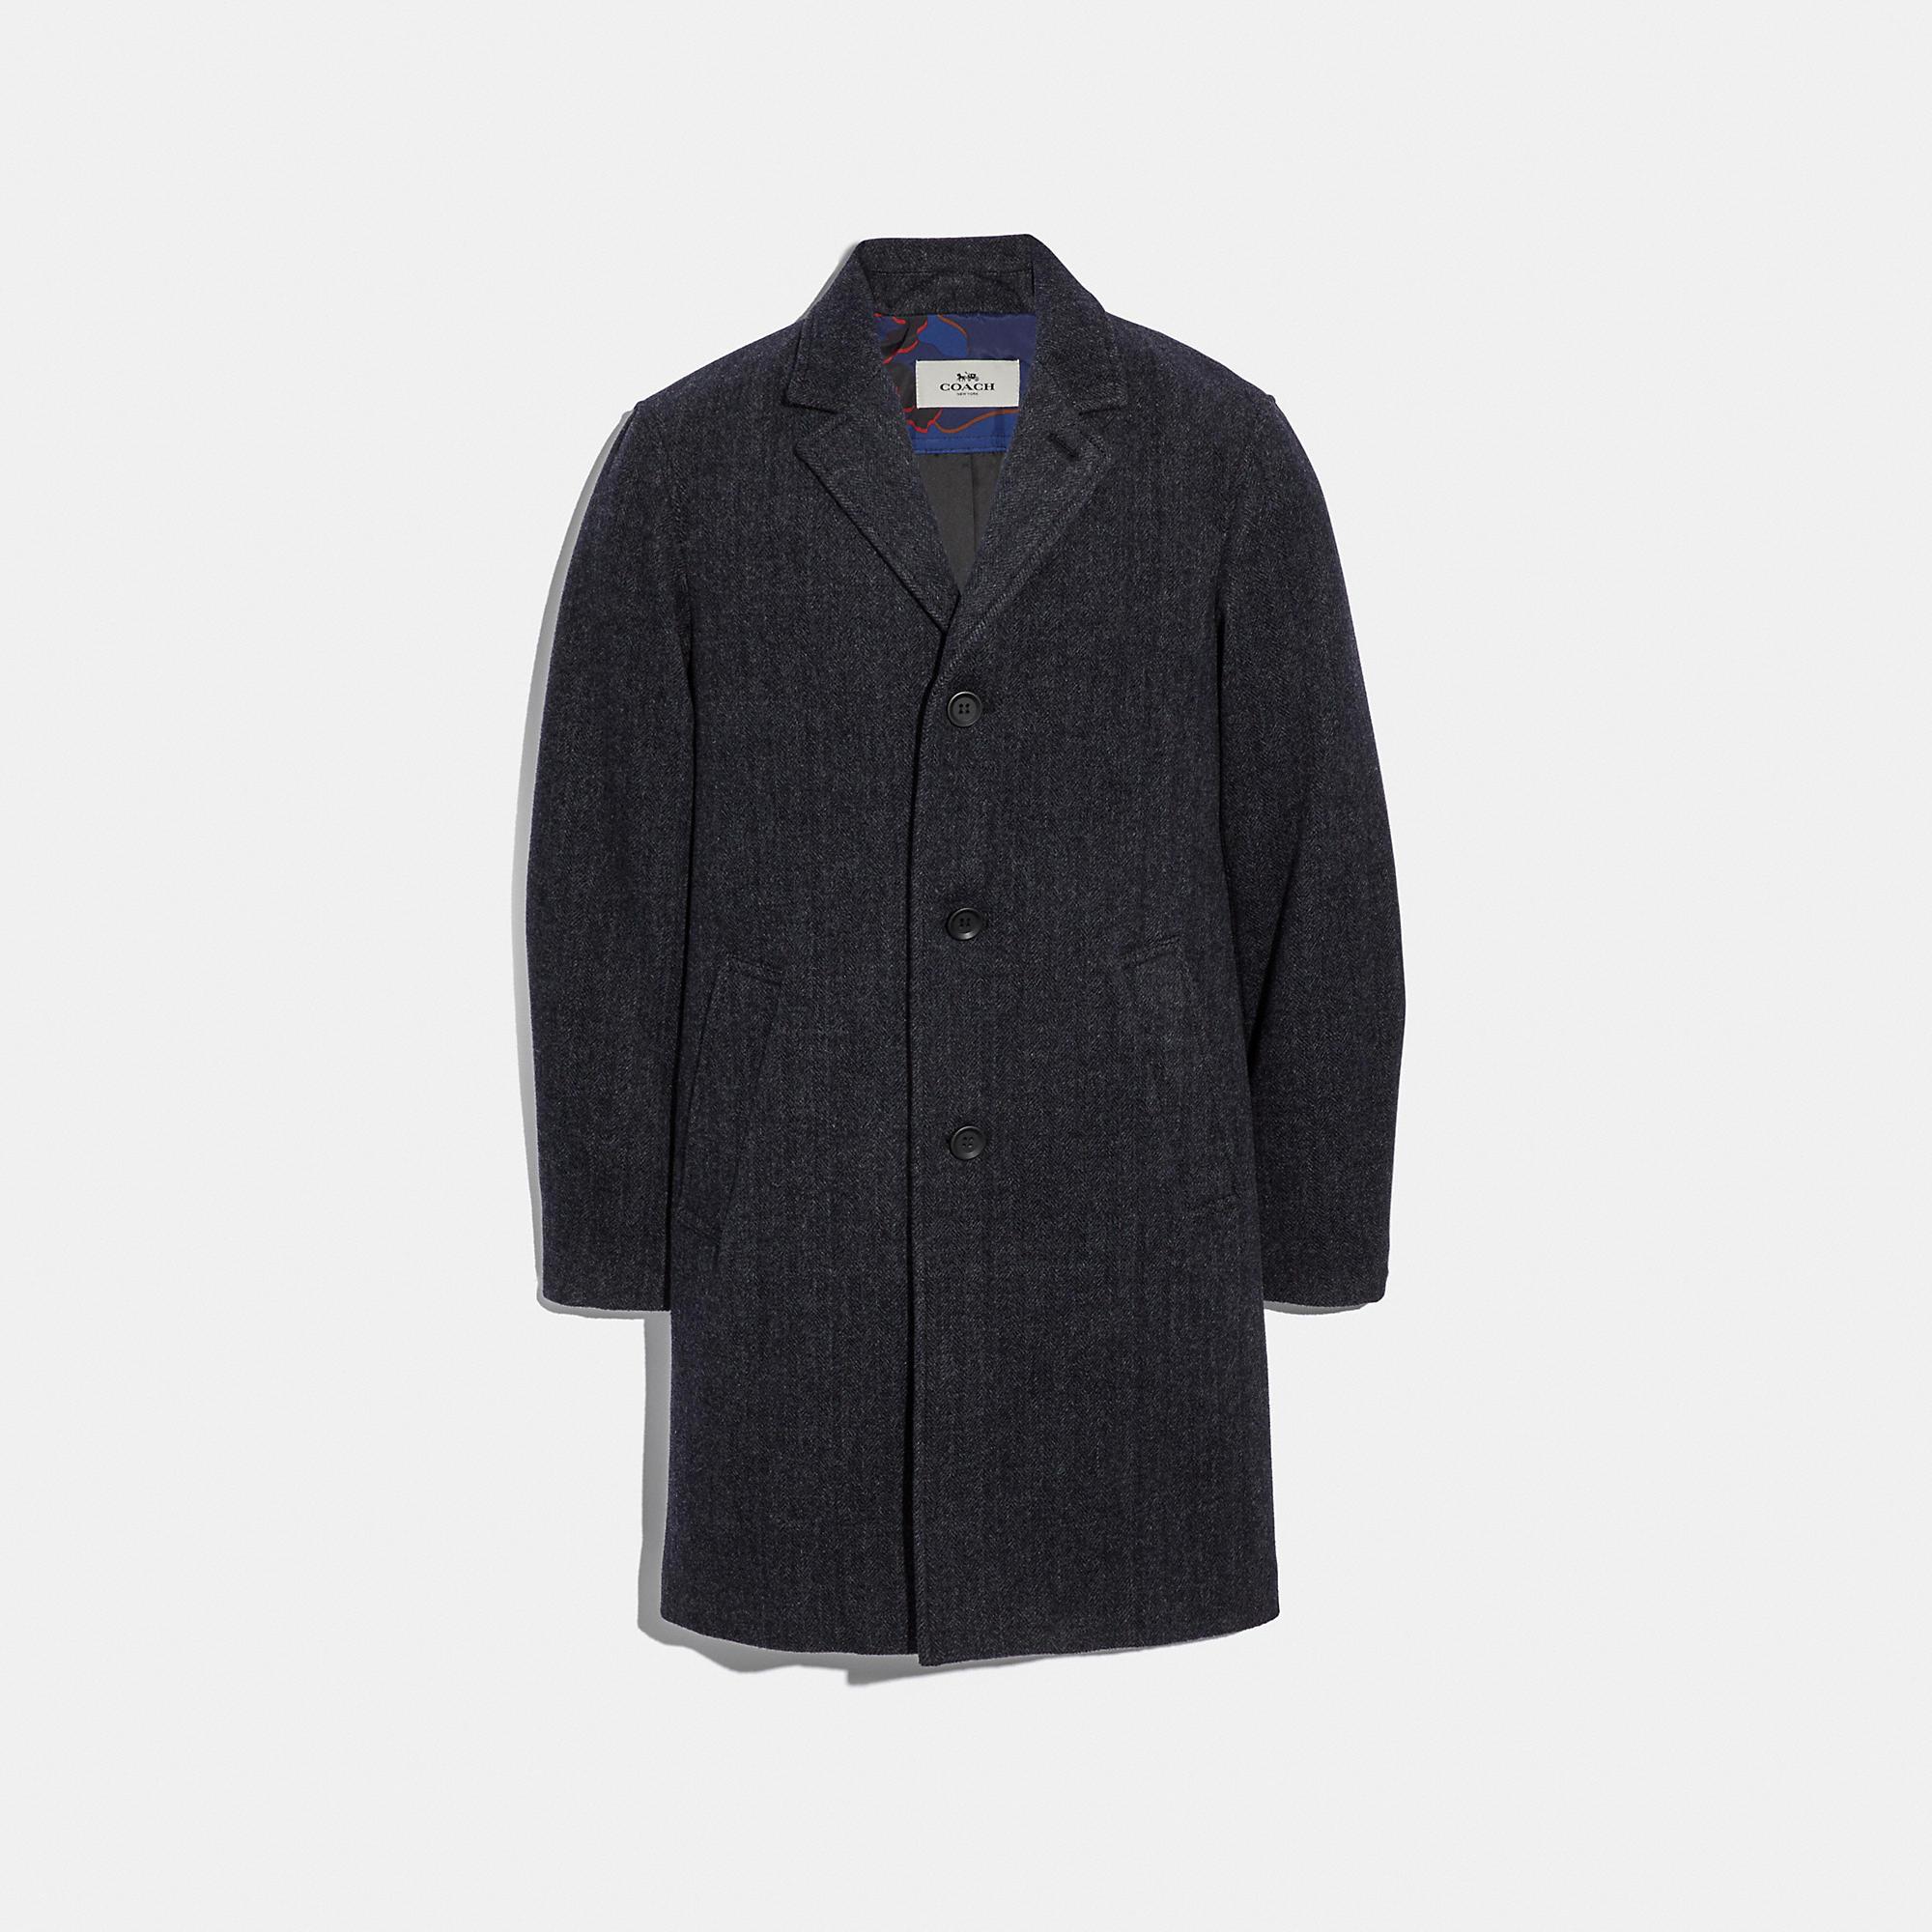 COACH Long Wool Topcoat in Charcoal (Blue) for Men - Lyst